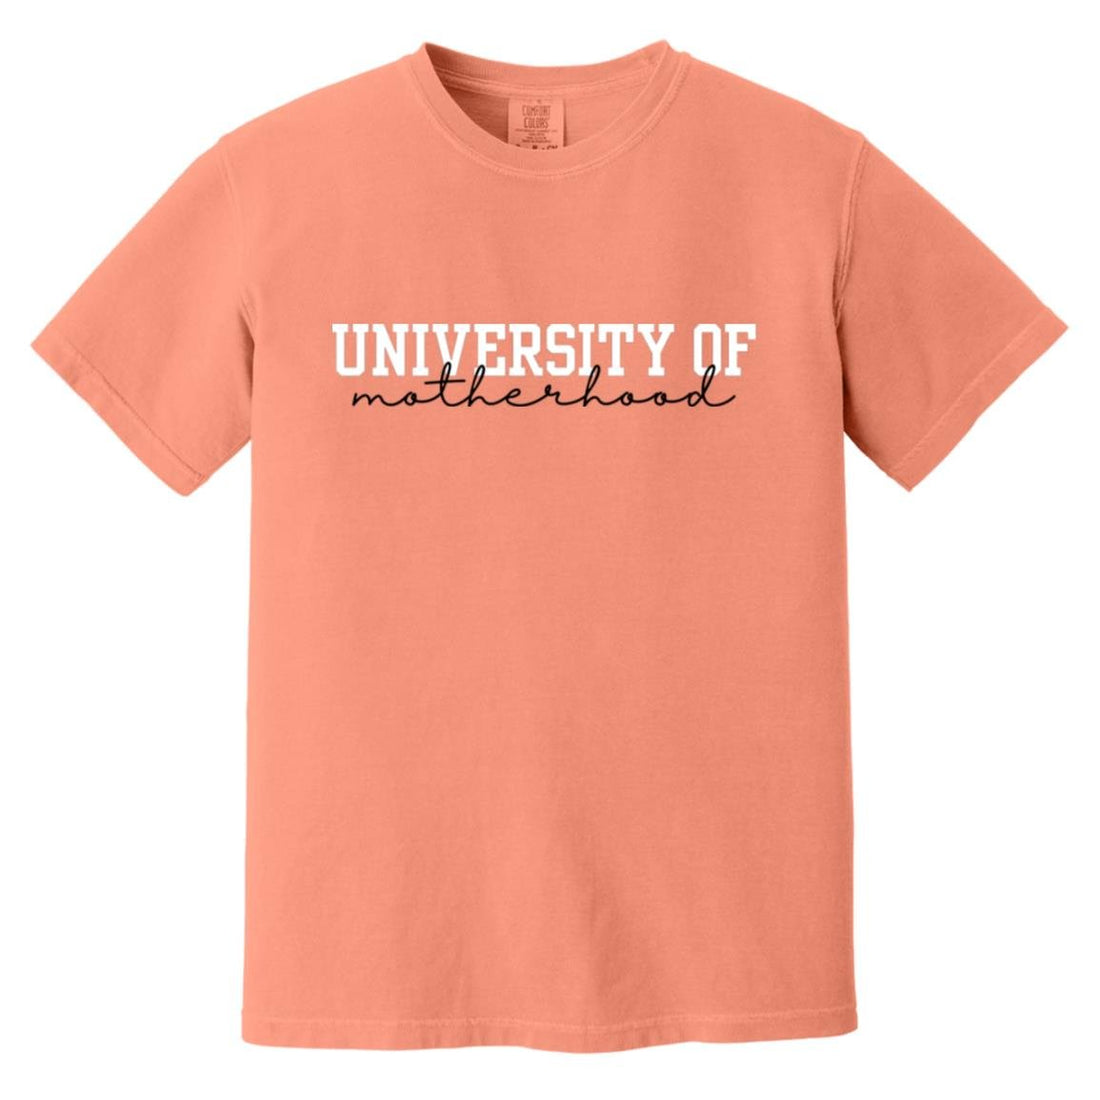 Univ Of Motherhood - T-Shirts - Positively Sassy - Univ Of Motherhood